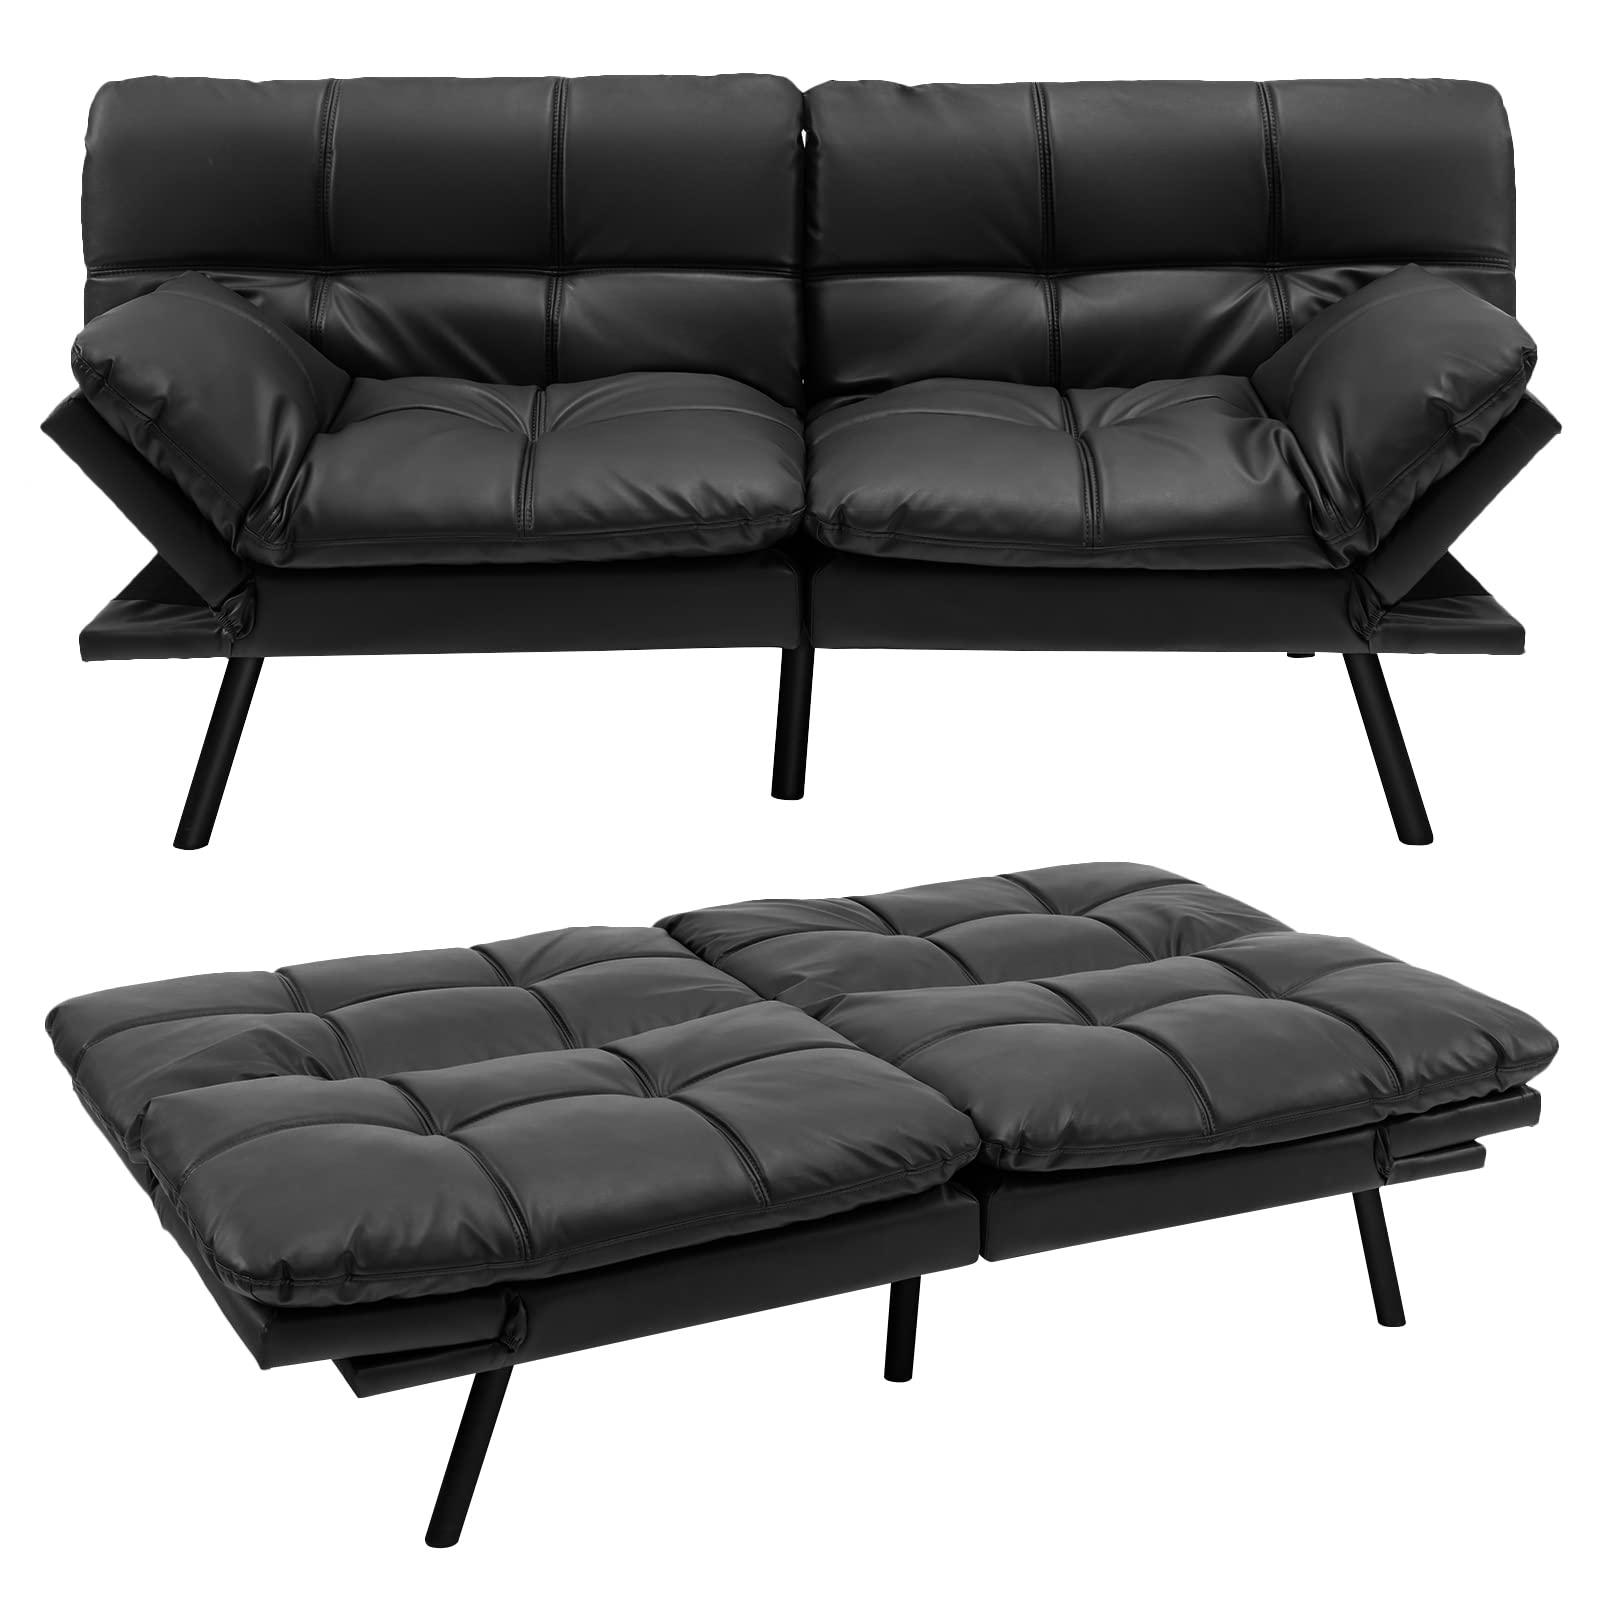 Convertible Memory Foam Futon Couch Sleeper, Black - Giantex